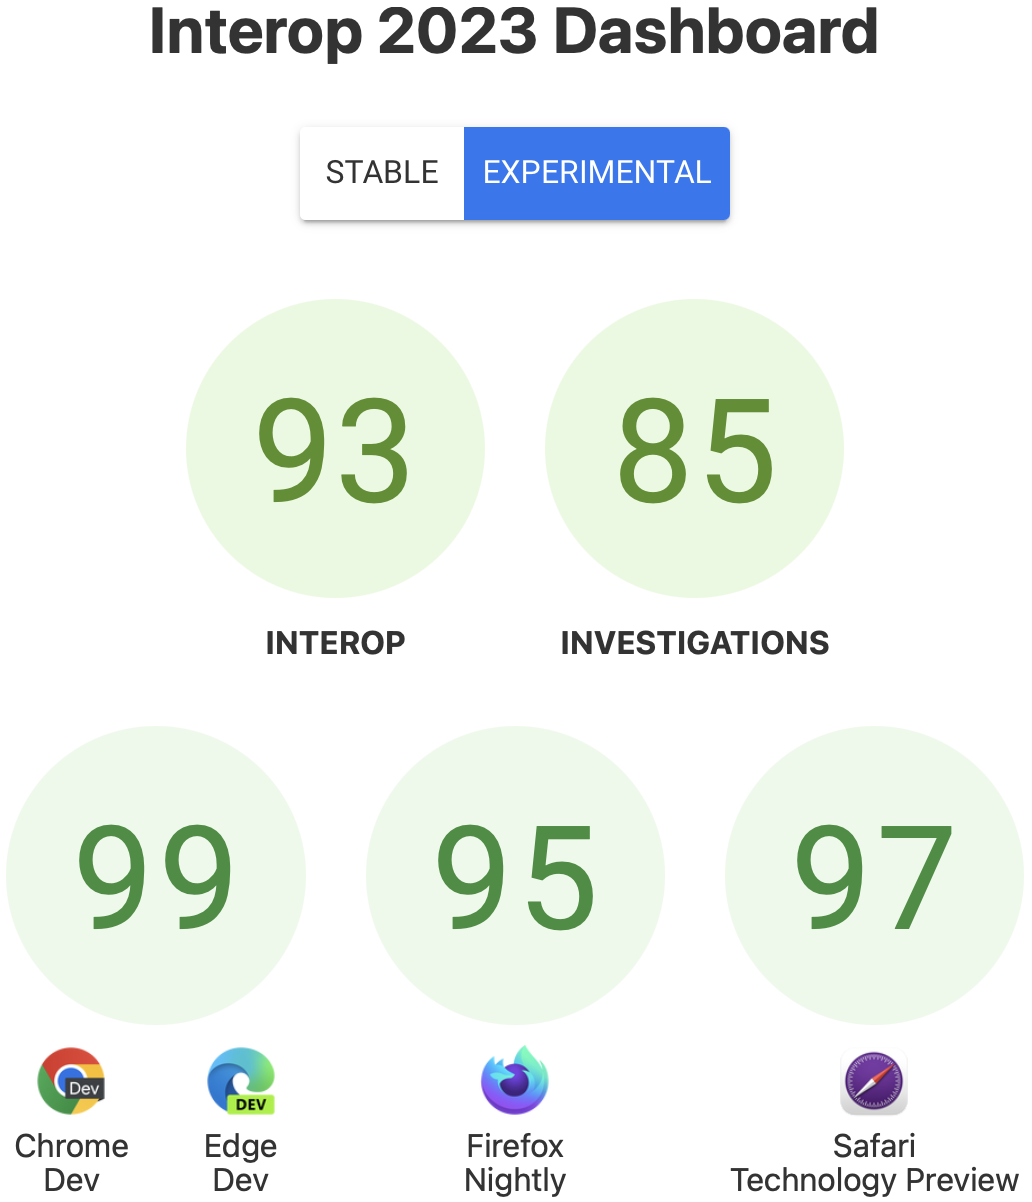 Current Interop 2023 scores: Chrome, 99%. Firefox, 95%. Safari 97%.